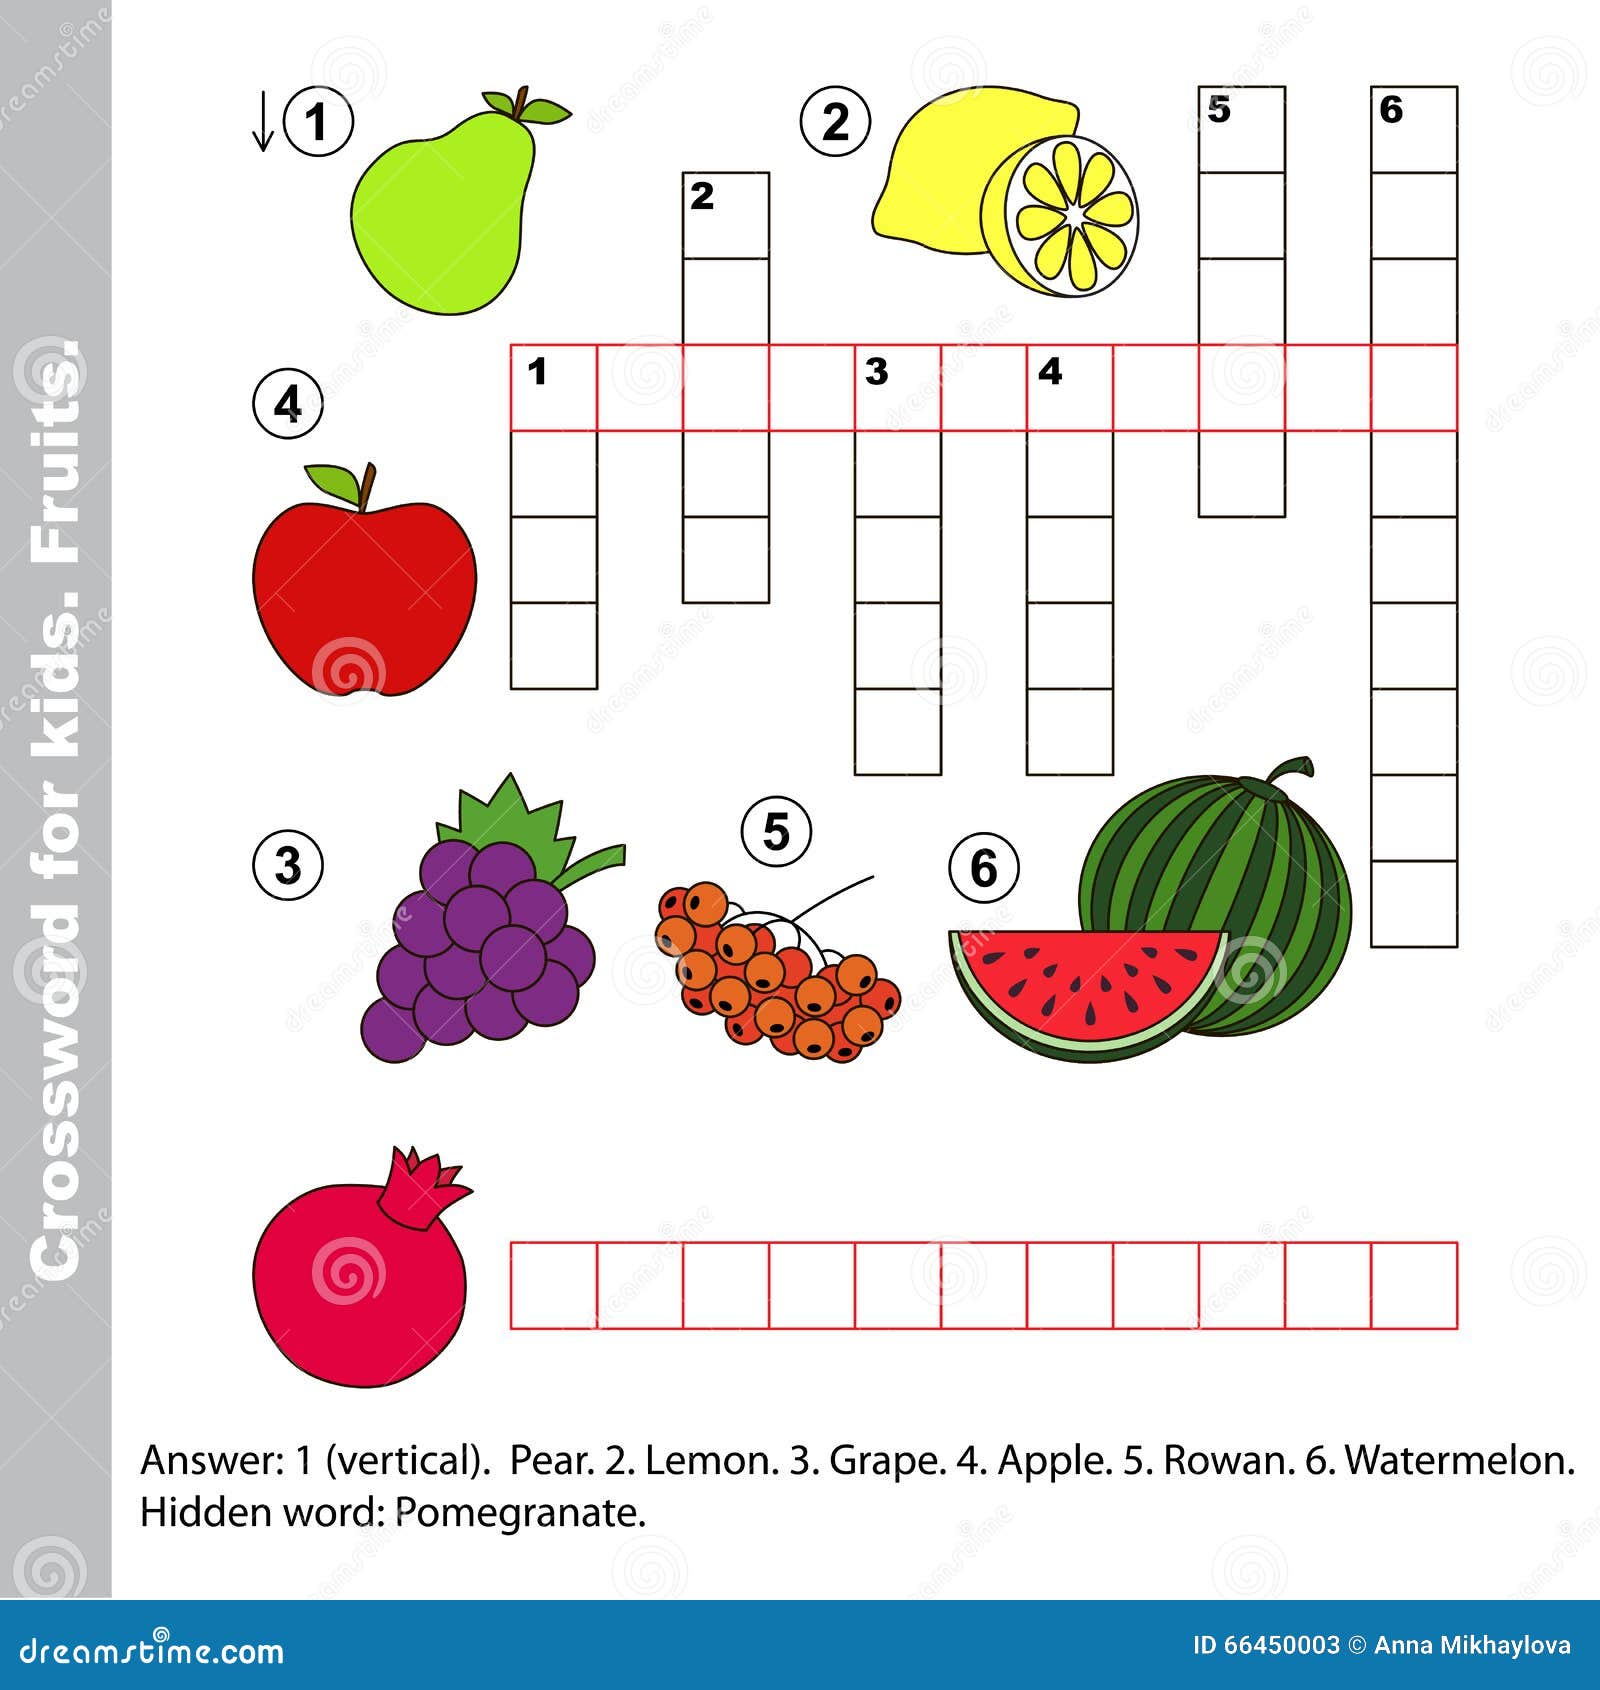 Овощи 7 букв сканворд. Кроссворд овощи и фрукты. Кроссворд на тему фрукты. Кроссворд овощи для детей. Кроссворд фрукты для детей.